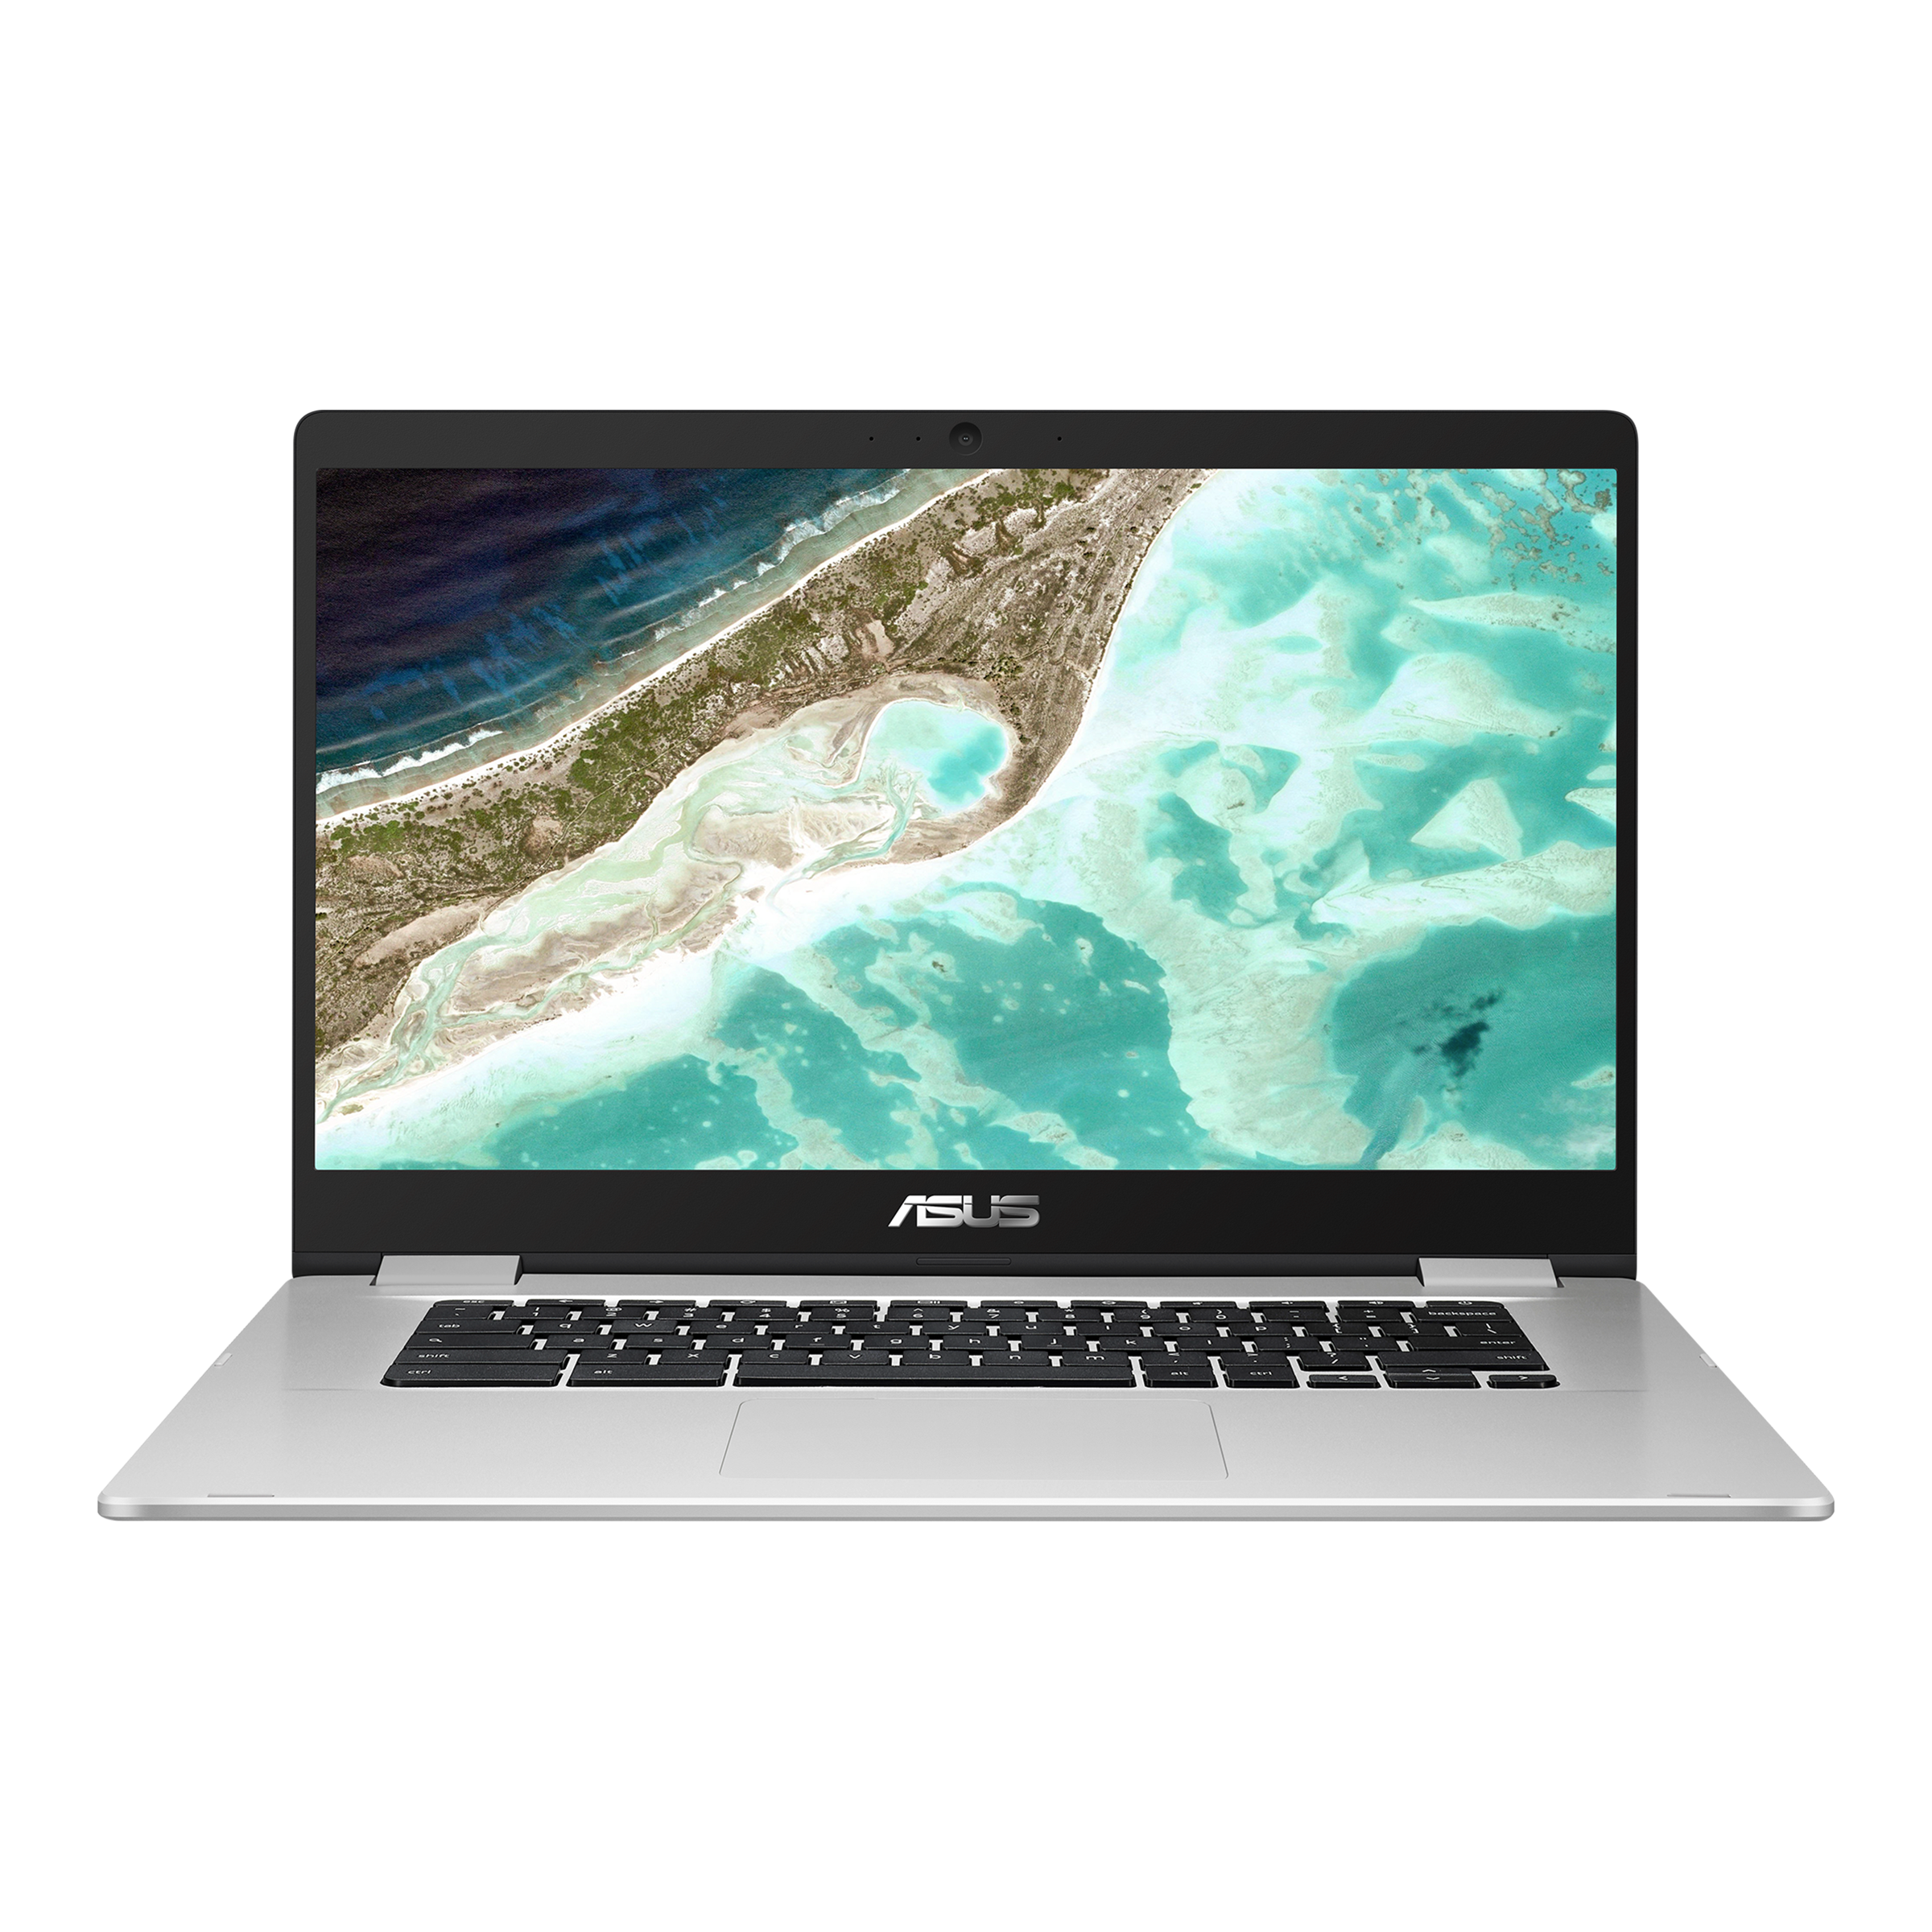 ASUS Chromebook C523｜Laptops For Work｜ASUS Global